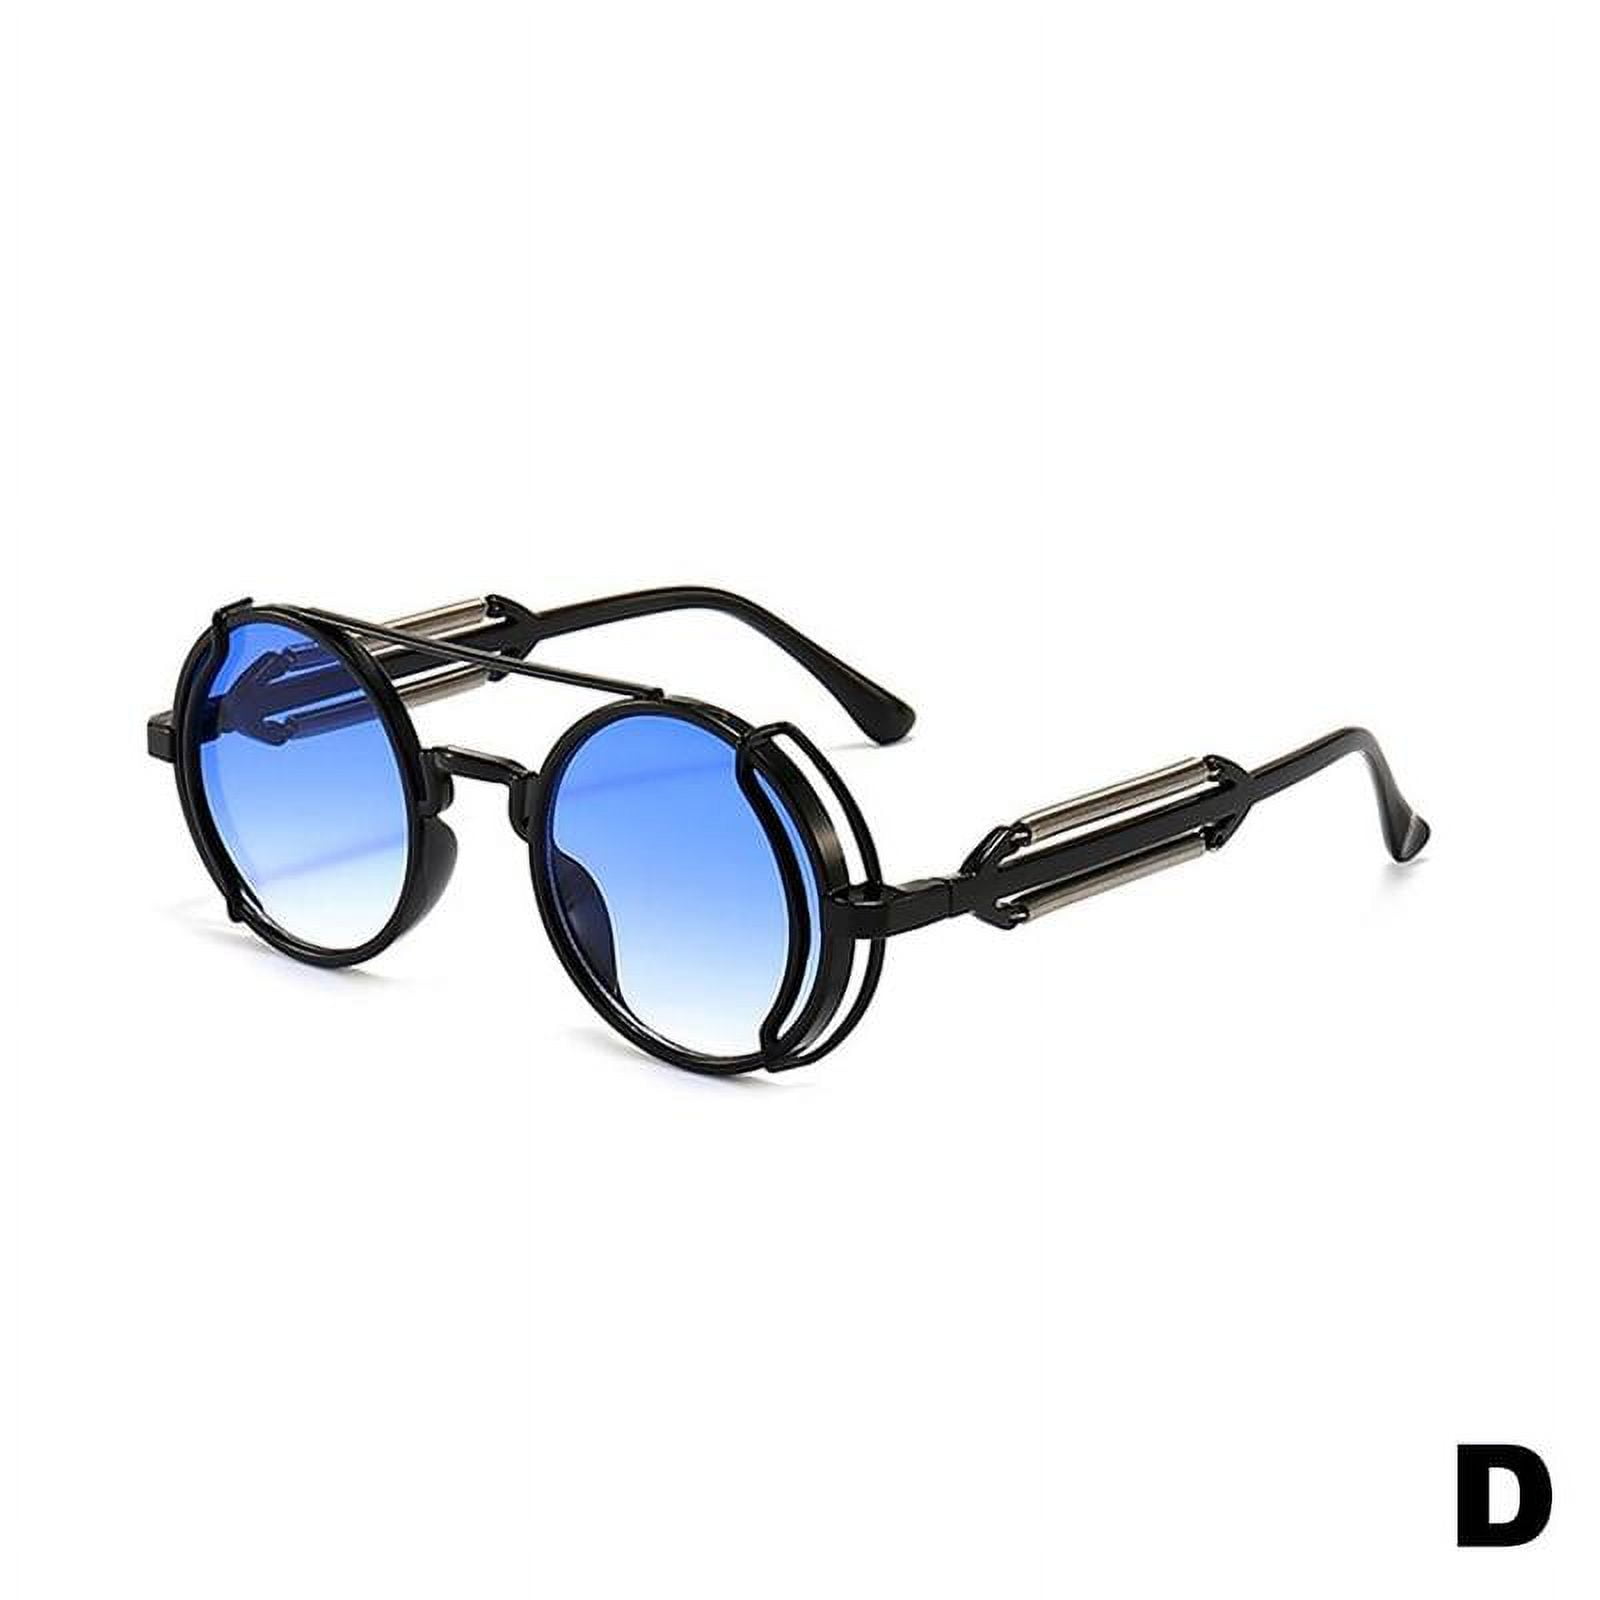 Details more than 208 summer sunglasses for men latest